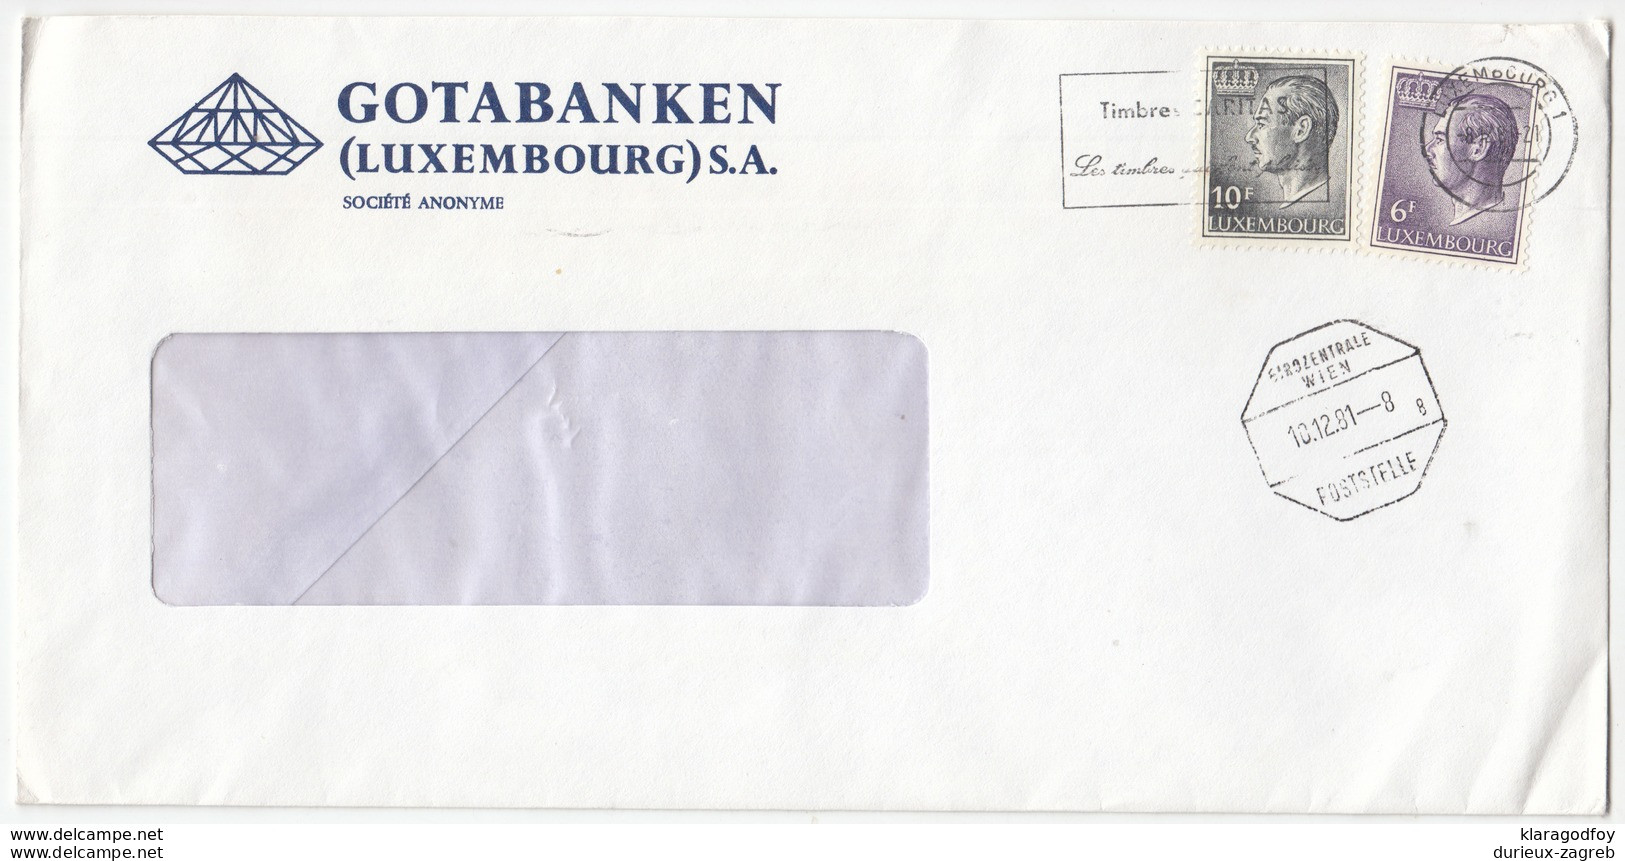 Gotabanken Company Letter Cover Travelled 1981 B171005 - Lettres & Documents